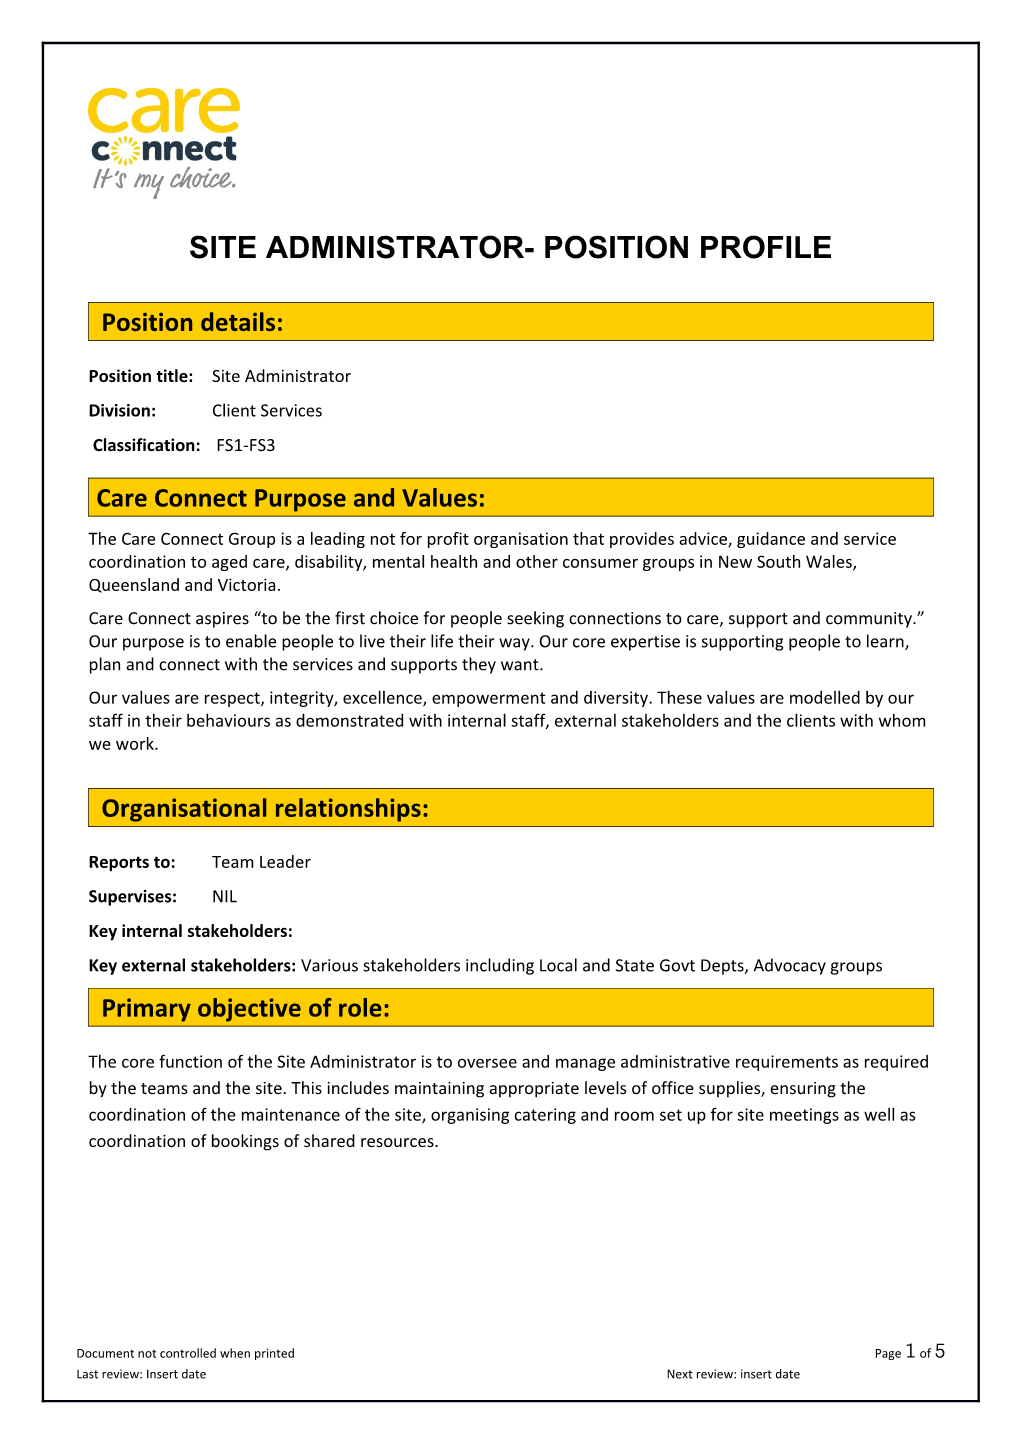 Site Administrator- Position Profile